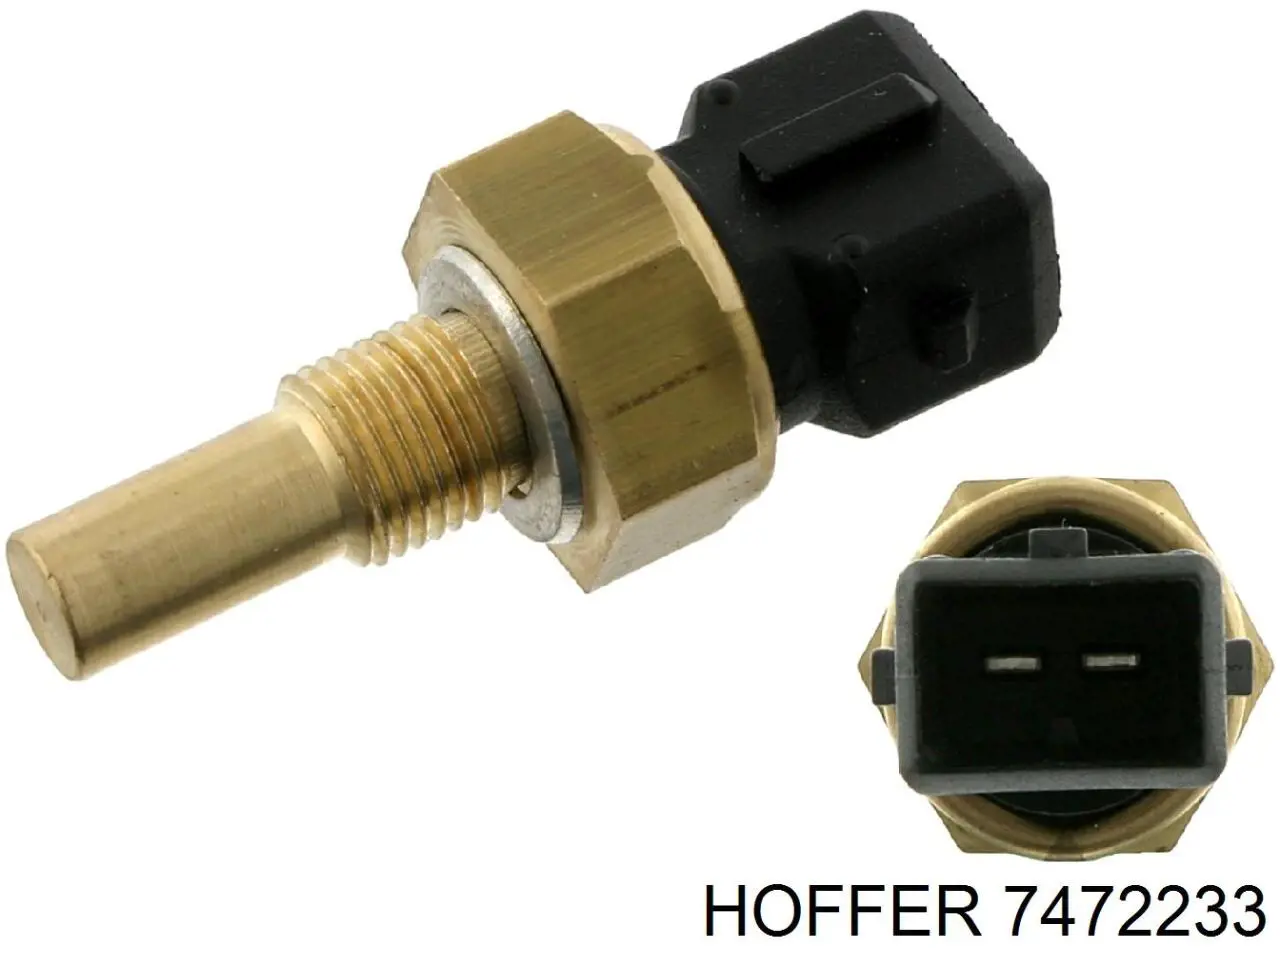 7472233 Hoffer датчик температуры масла двигателя